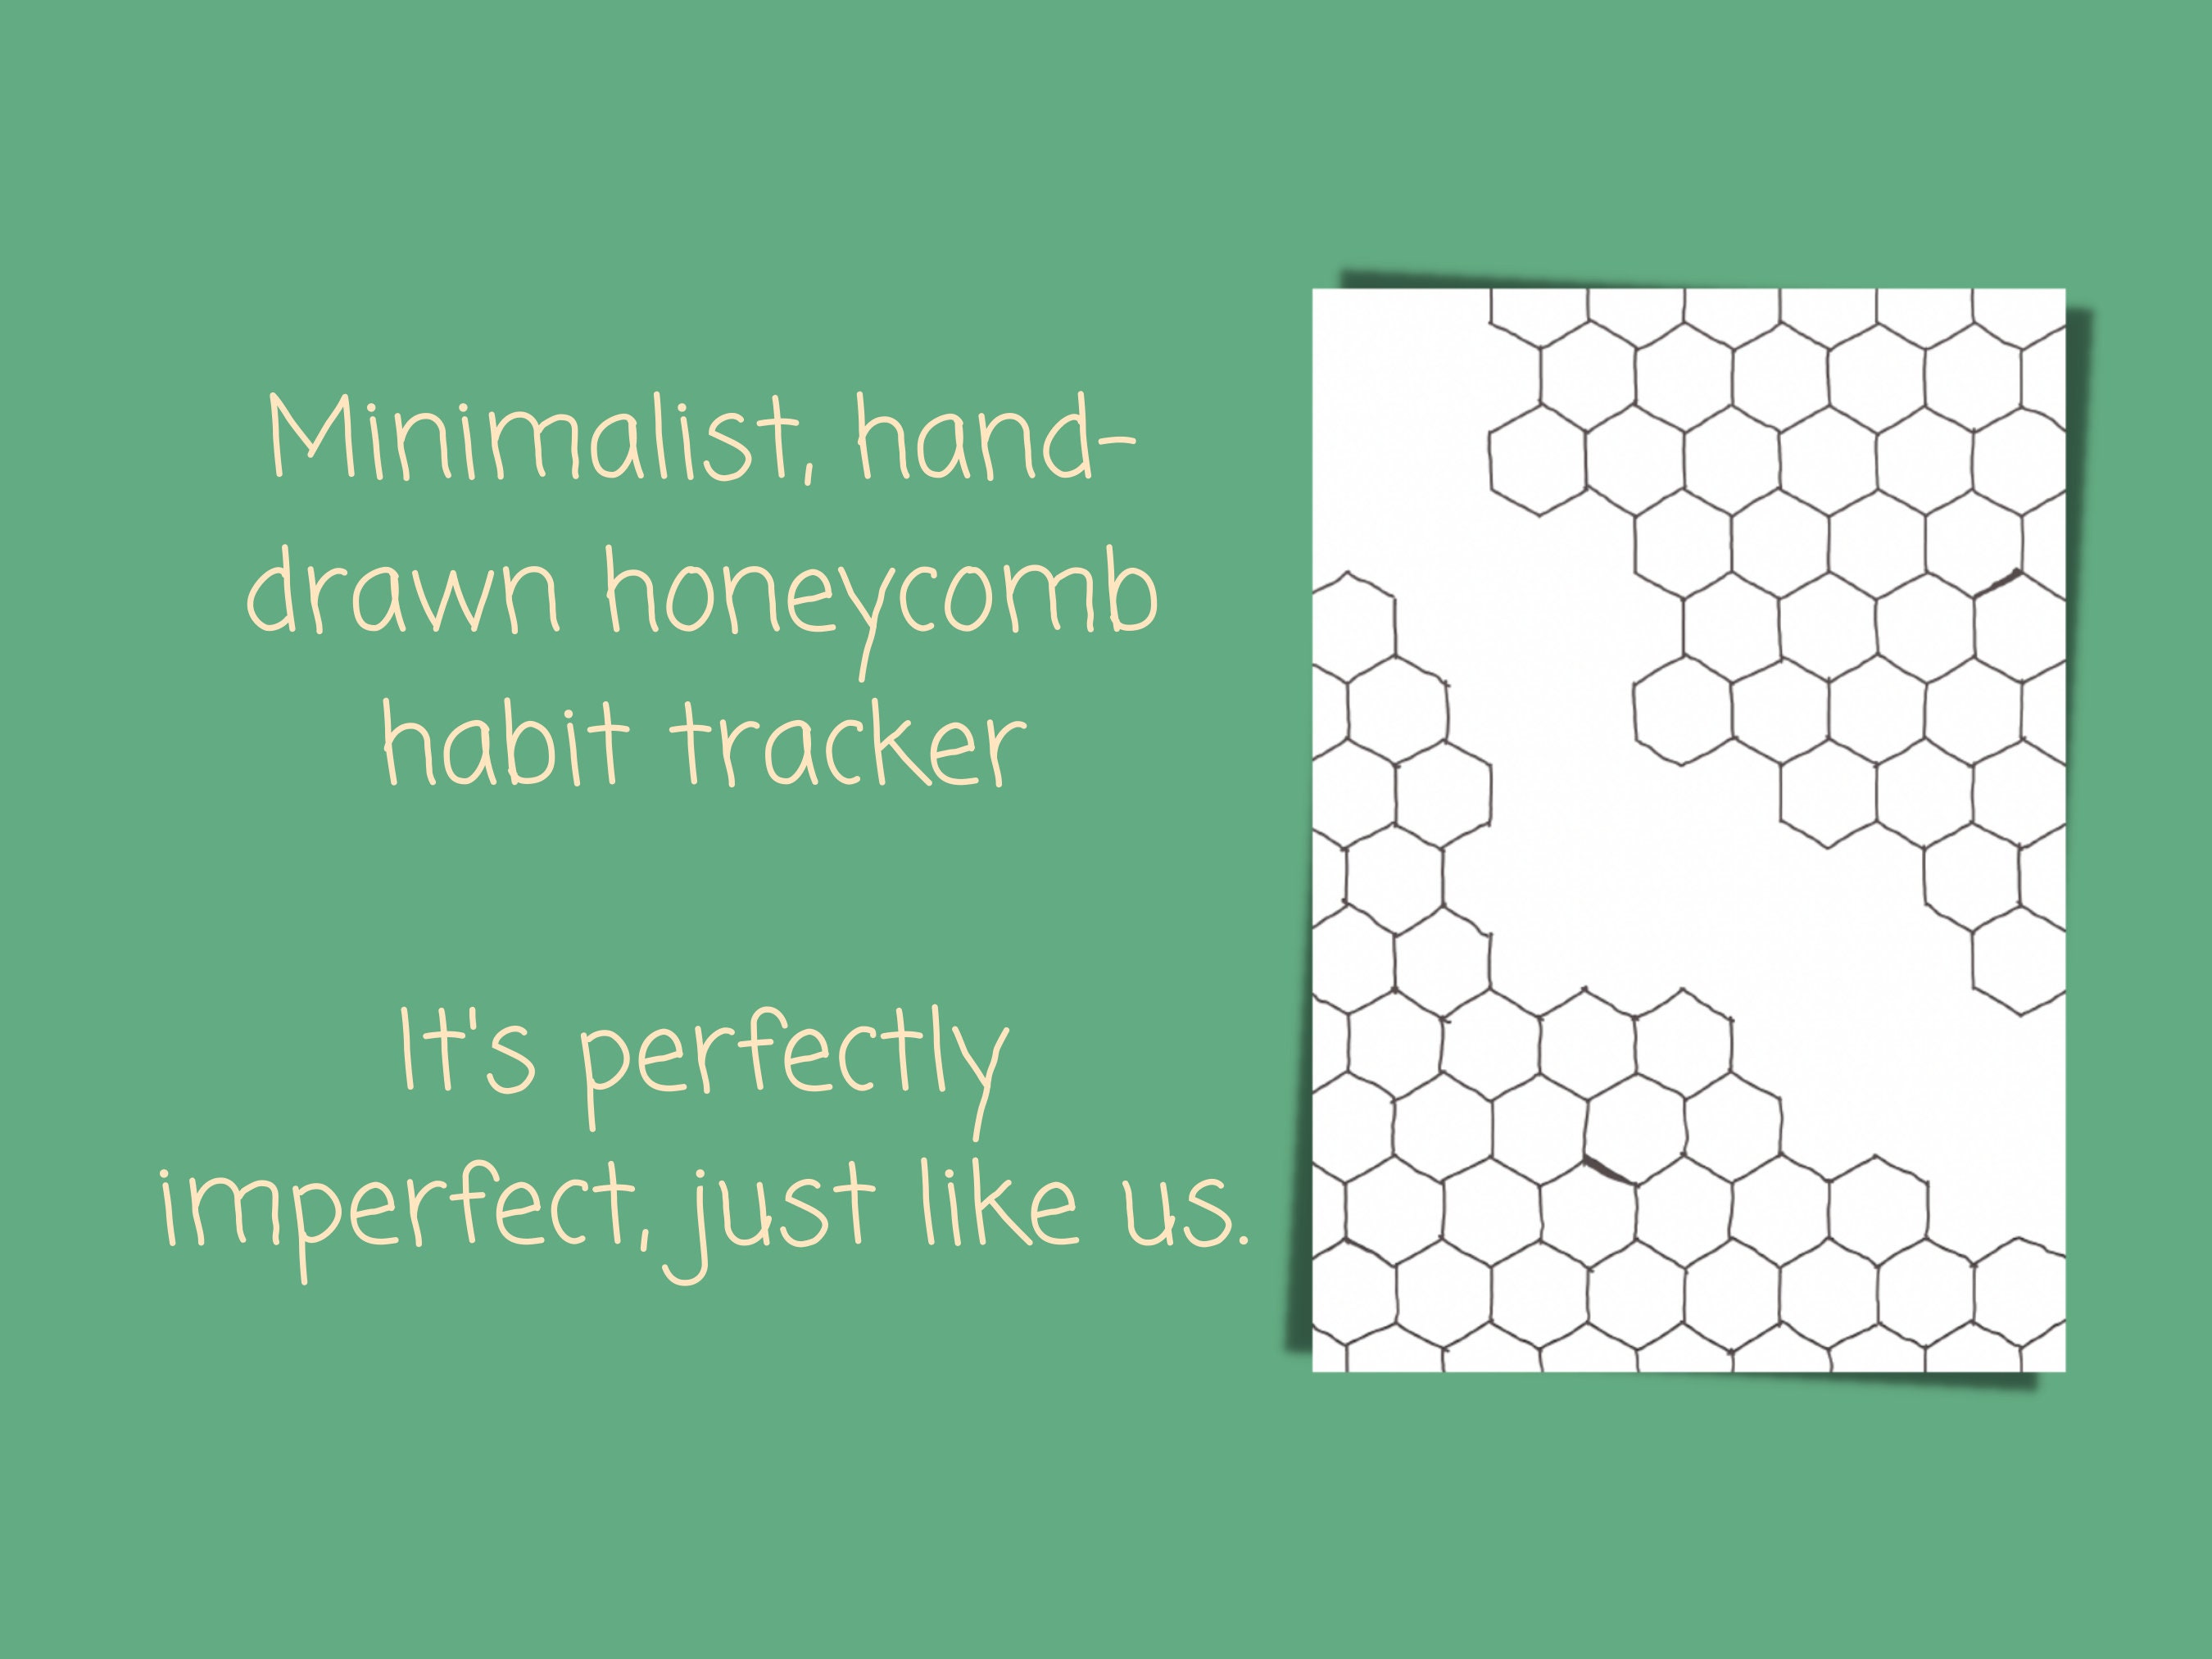 Honeycomb Habit Tracker Stamp, 30 Day Challenge Planner Rubber